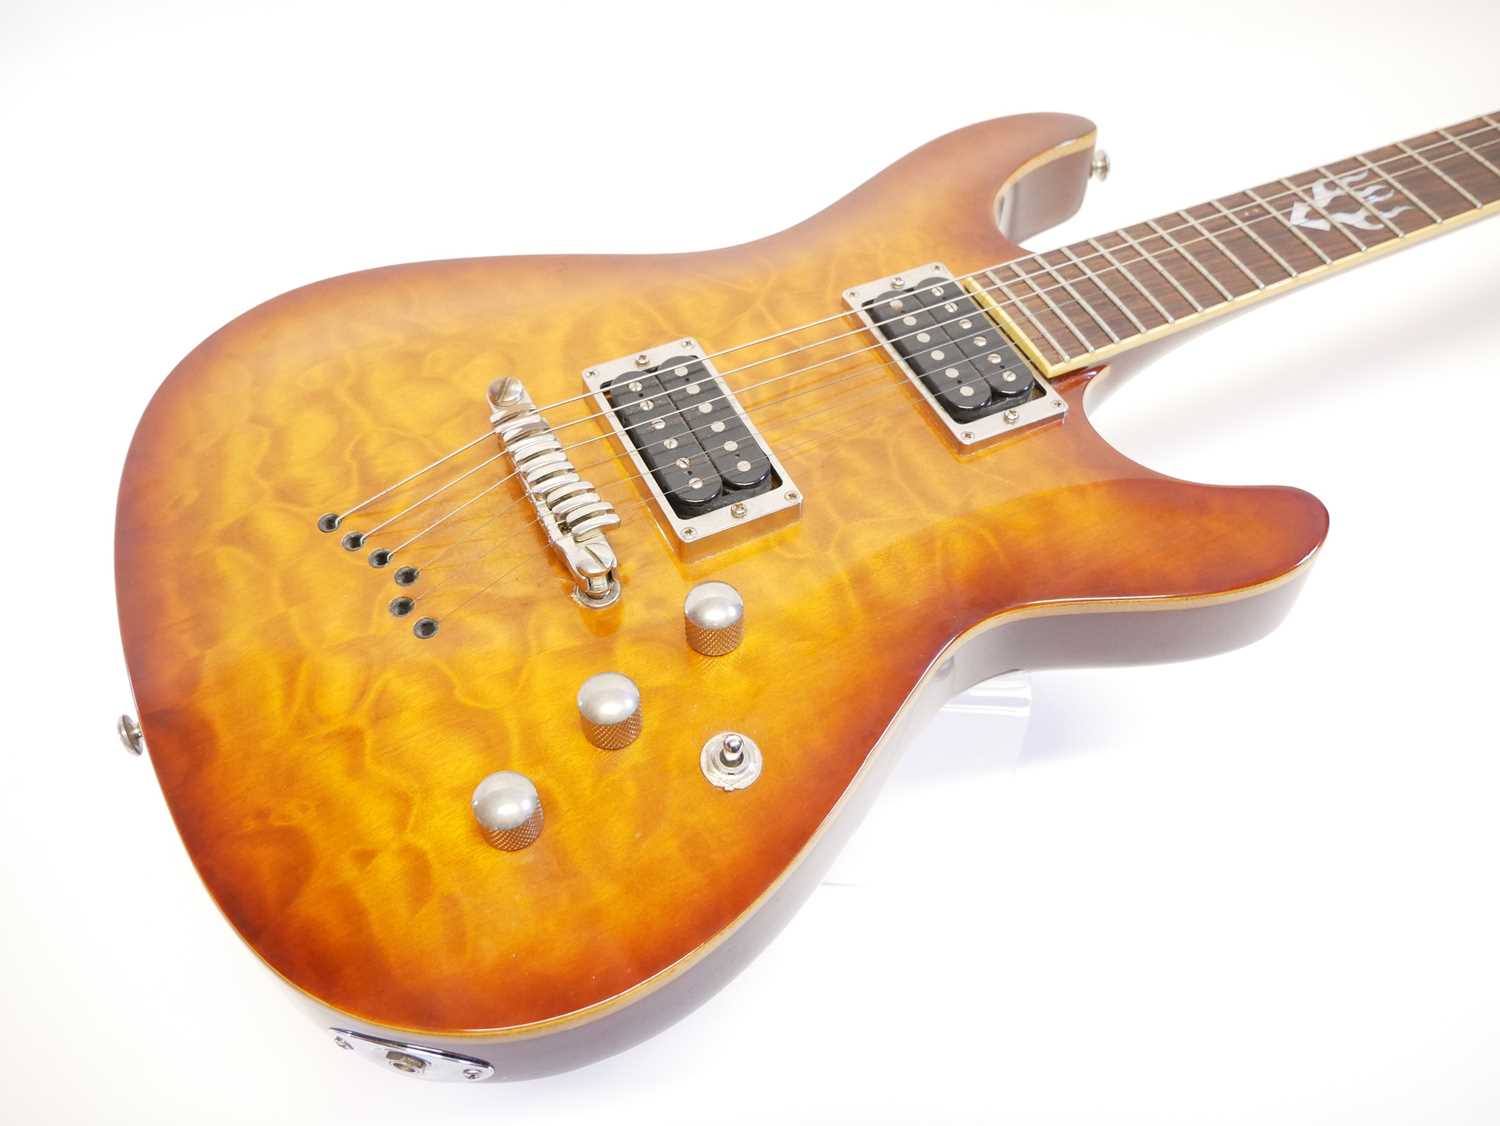 Ibanez SZ520 Electric Guitar - Image 2 of 11